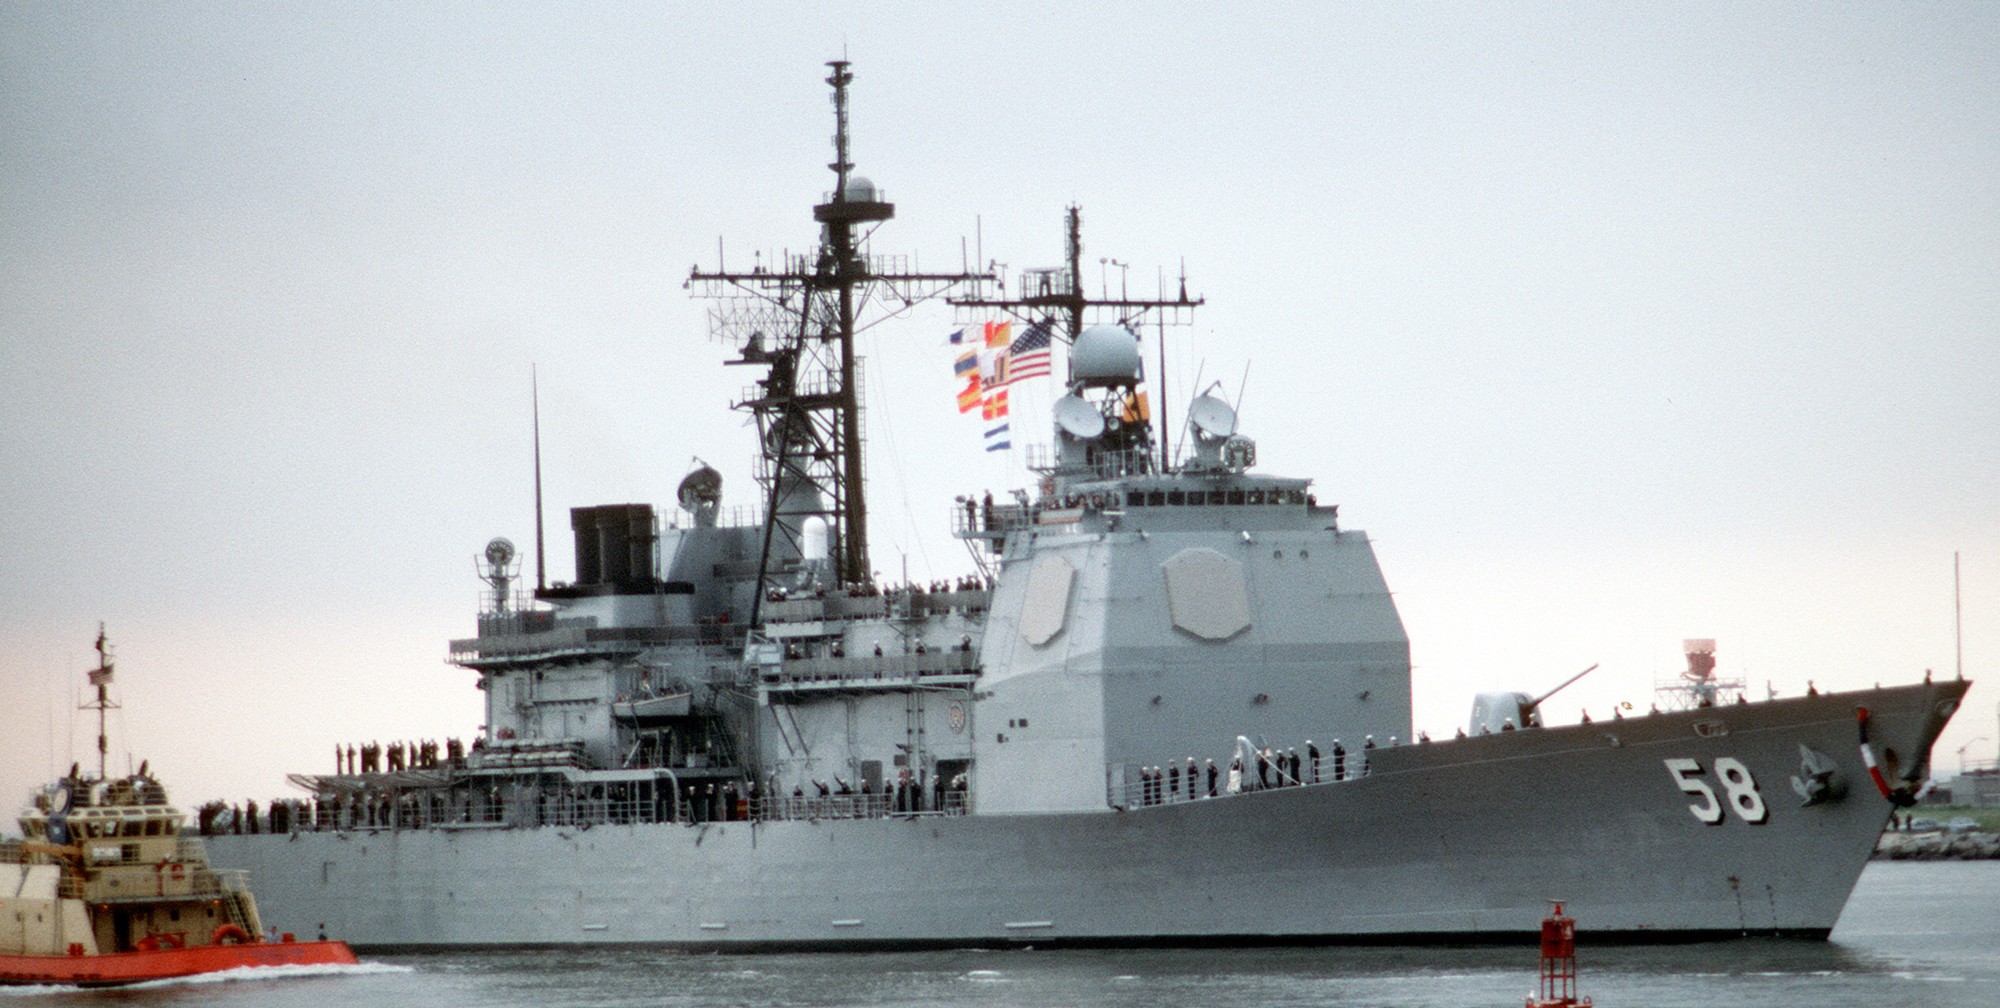 cg-58 uss philippine sea ticonderoga class guided missile cruiser aegis us navy returning mayport desert storm 82